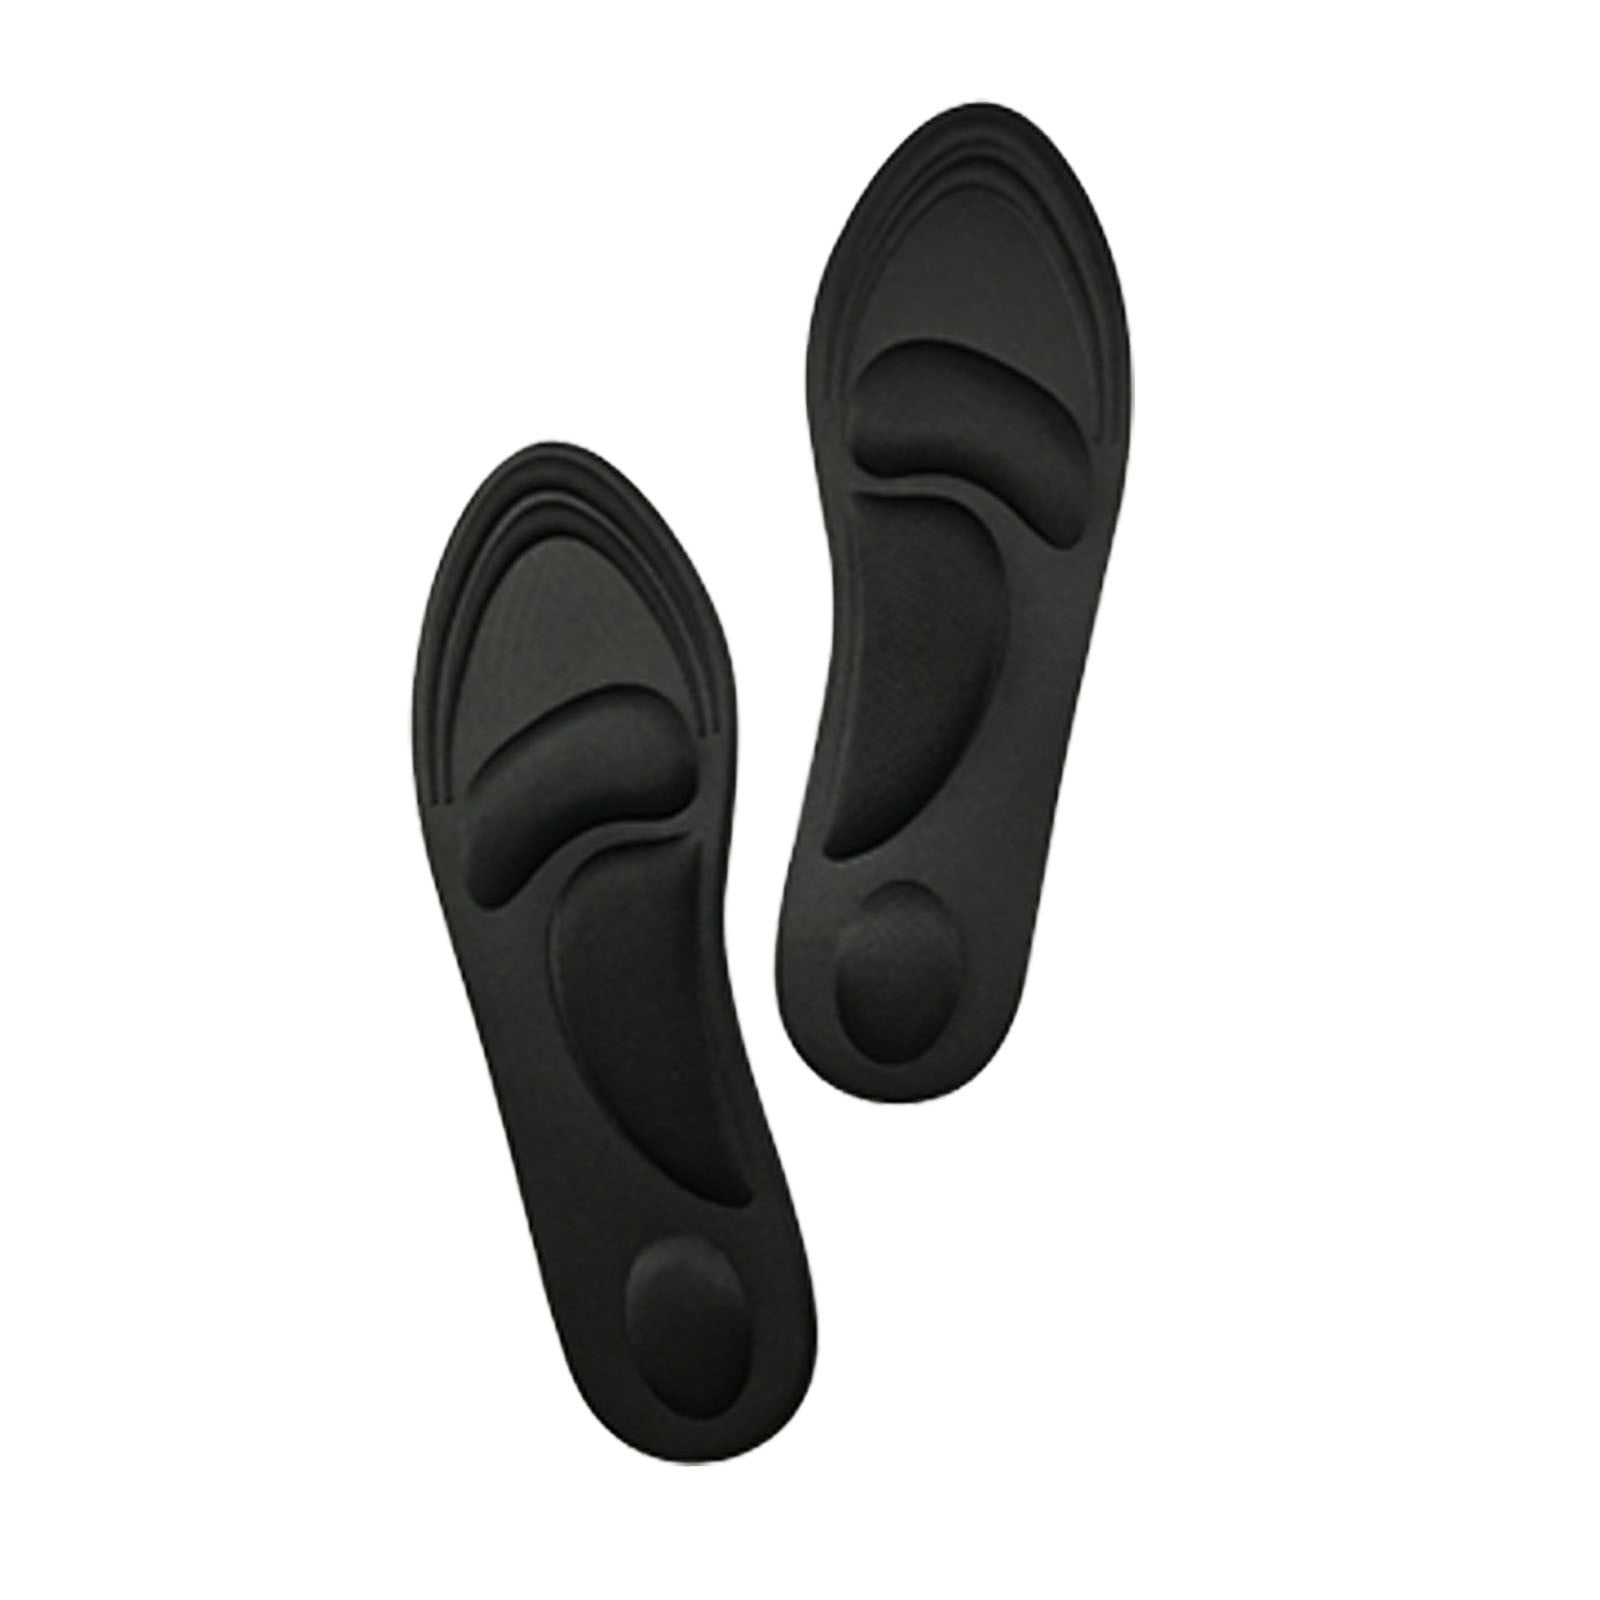 4D Sponge Soft Insole Comfort Shoe Pad Pain Relief Insert Cushion Foot Care 